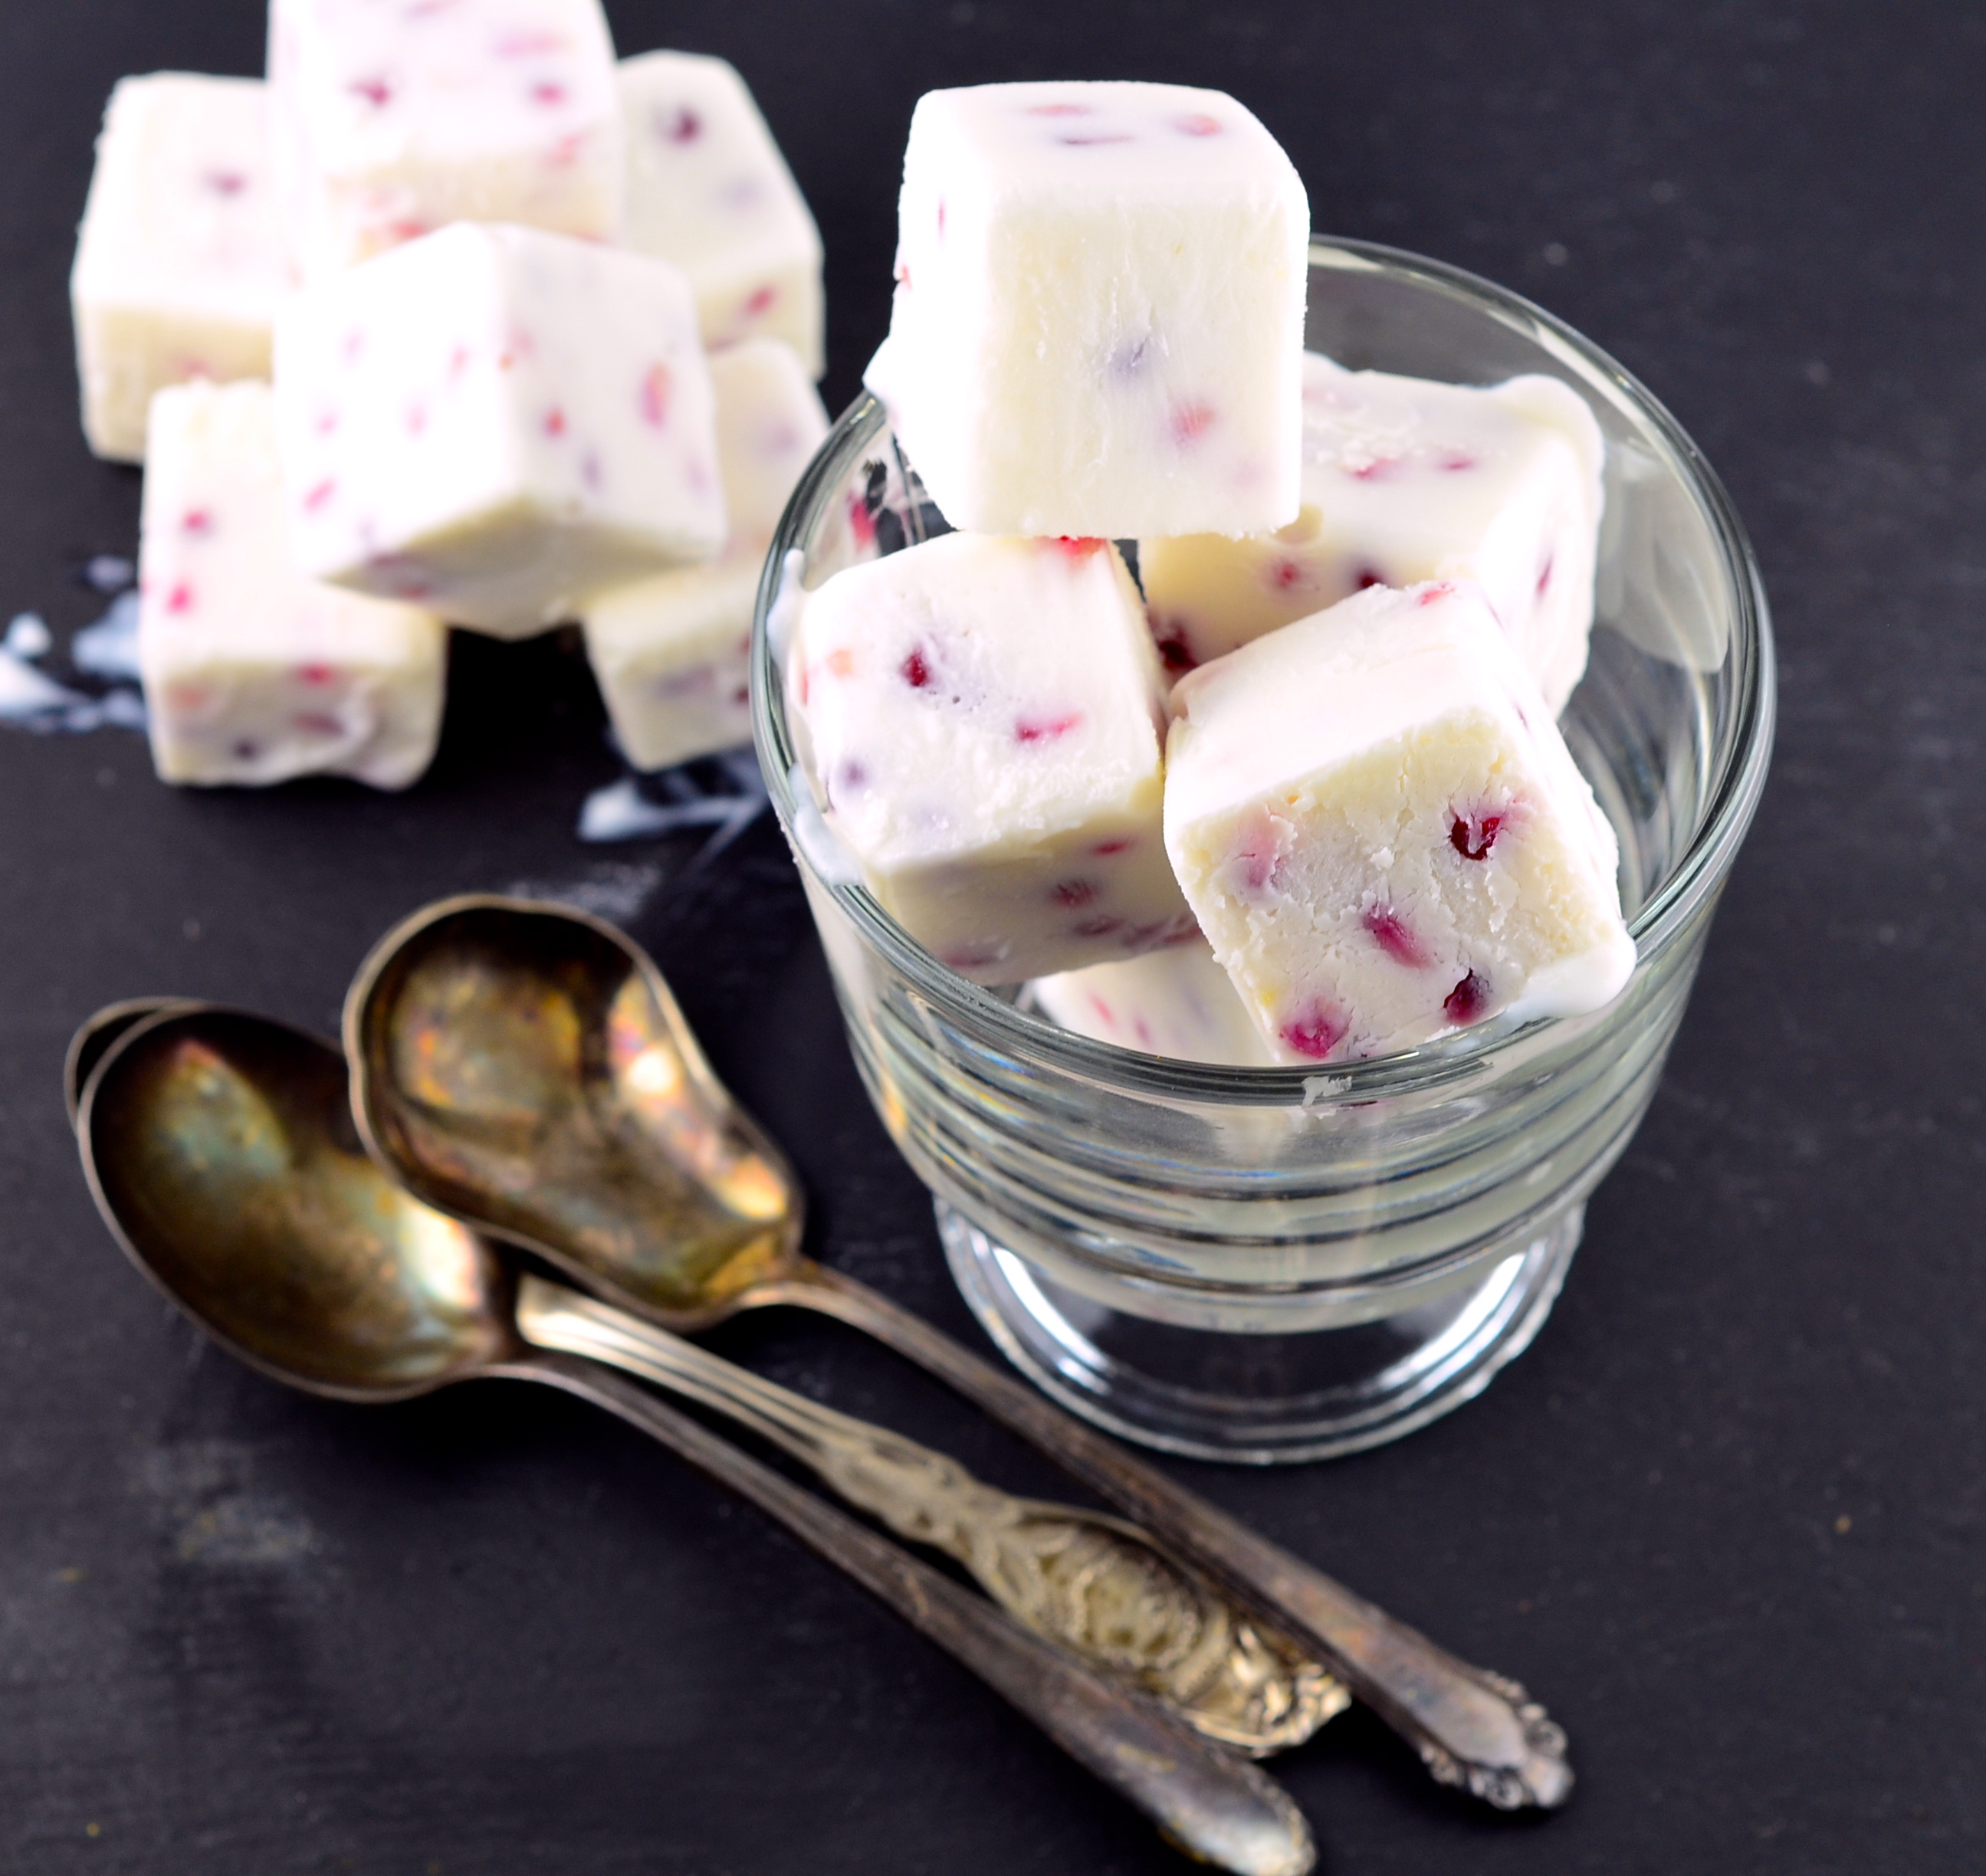 http://mayihavethatrecipe.com/2013/12/23/frozen-greek-yogurt-and-pomegranate-bites/>May I Have That Recipe